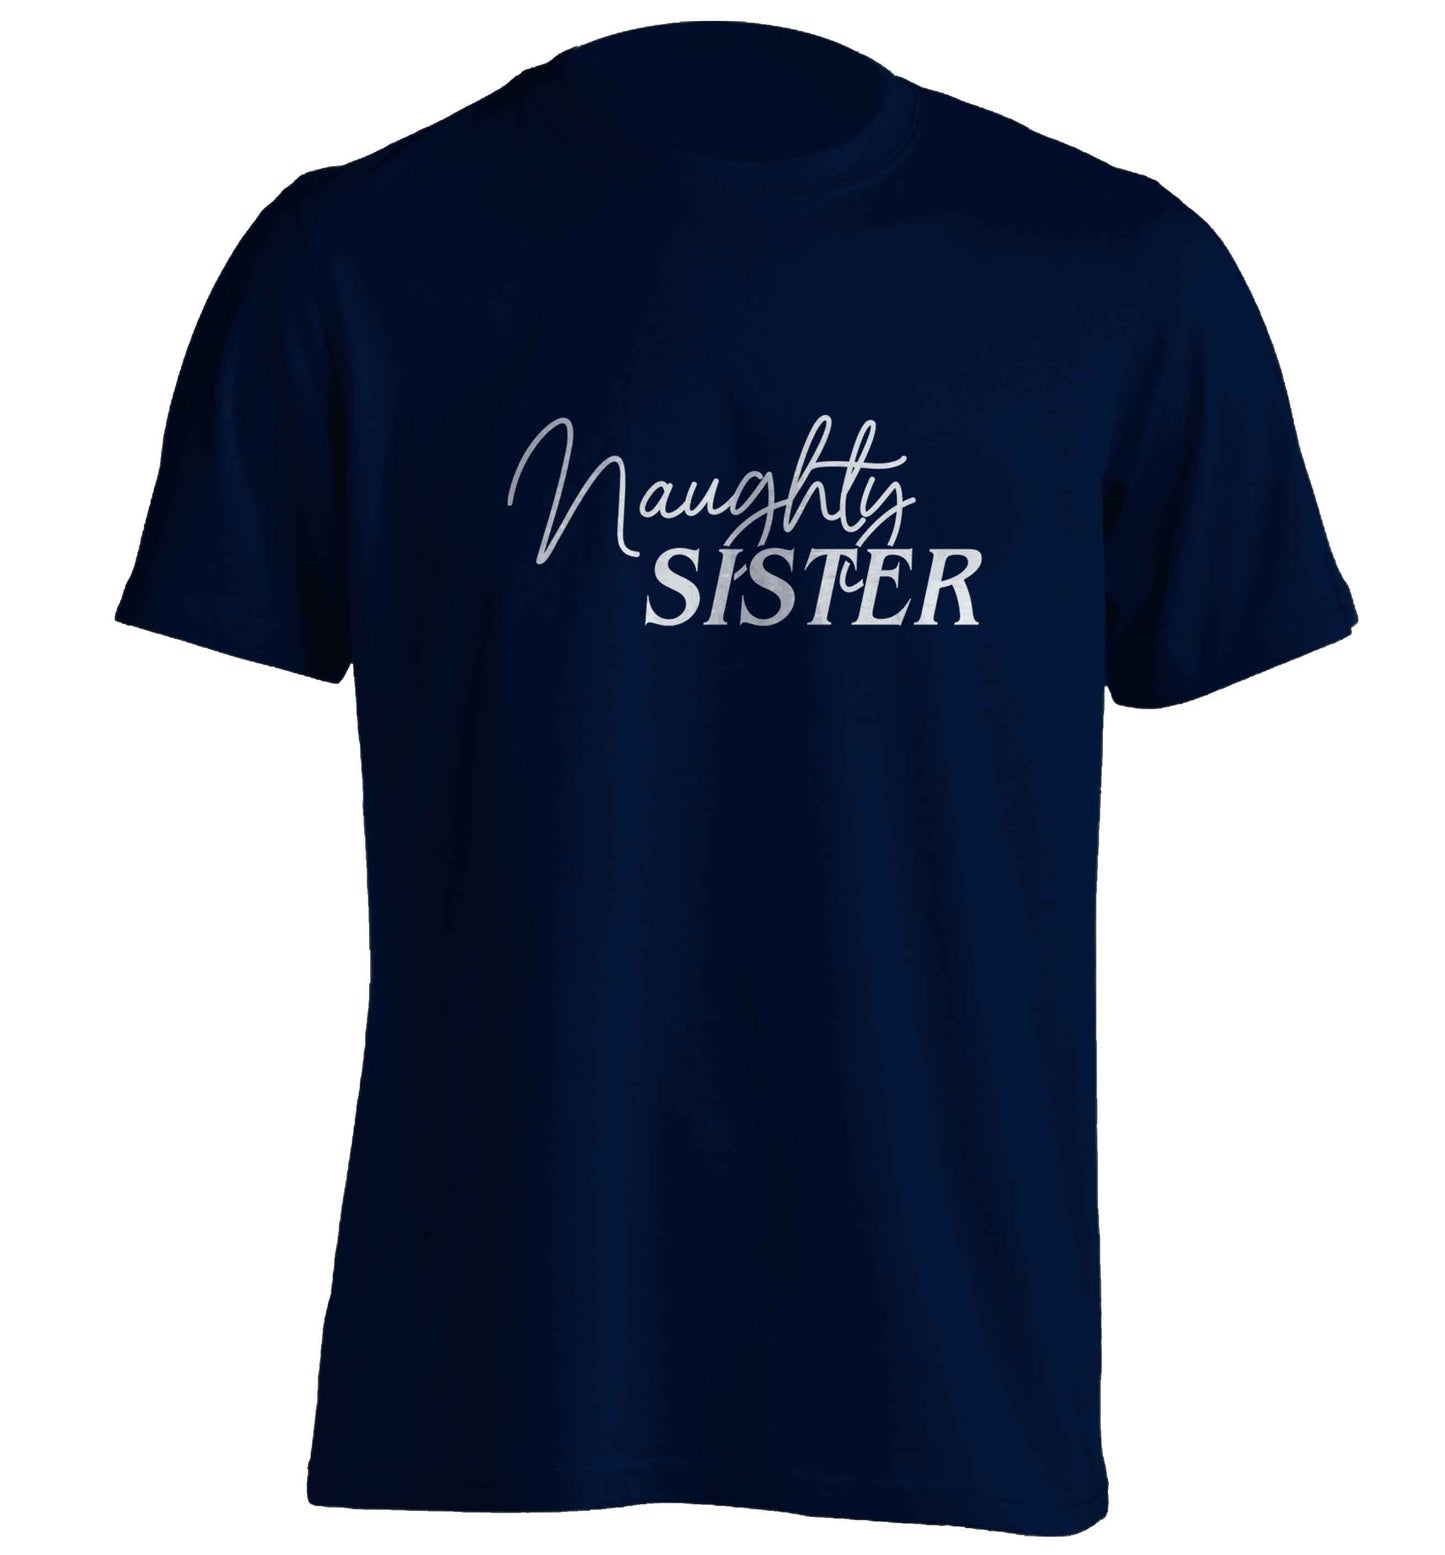 Naughty Sister adults unisex navy Tshirt 2XL